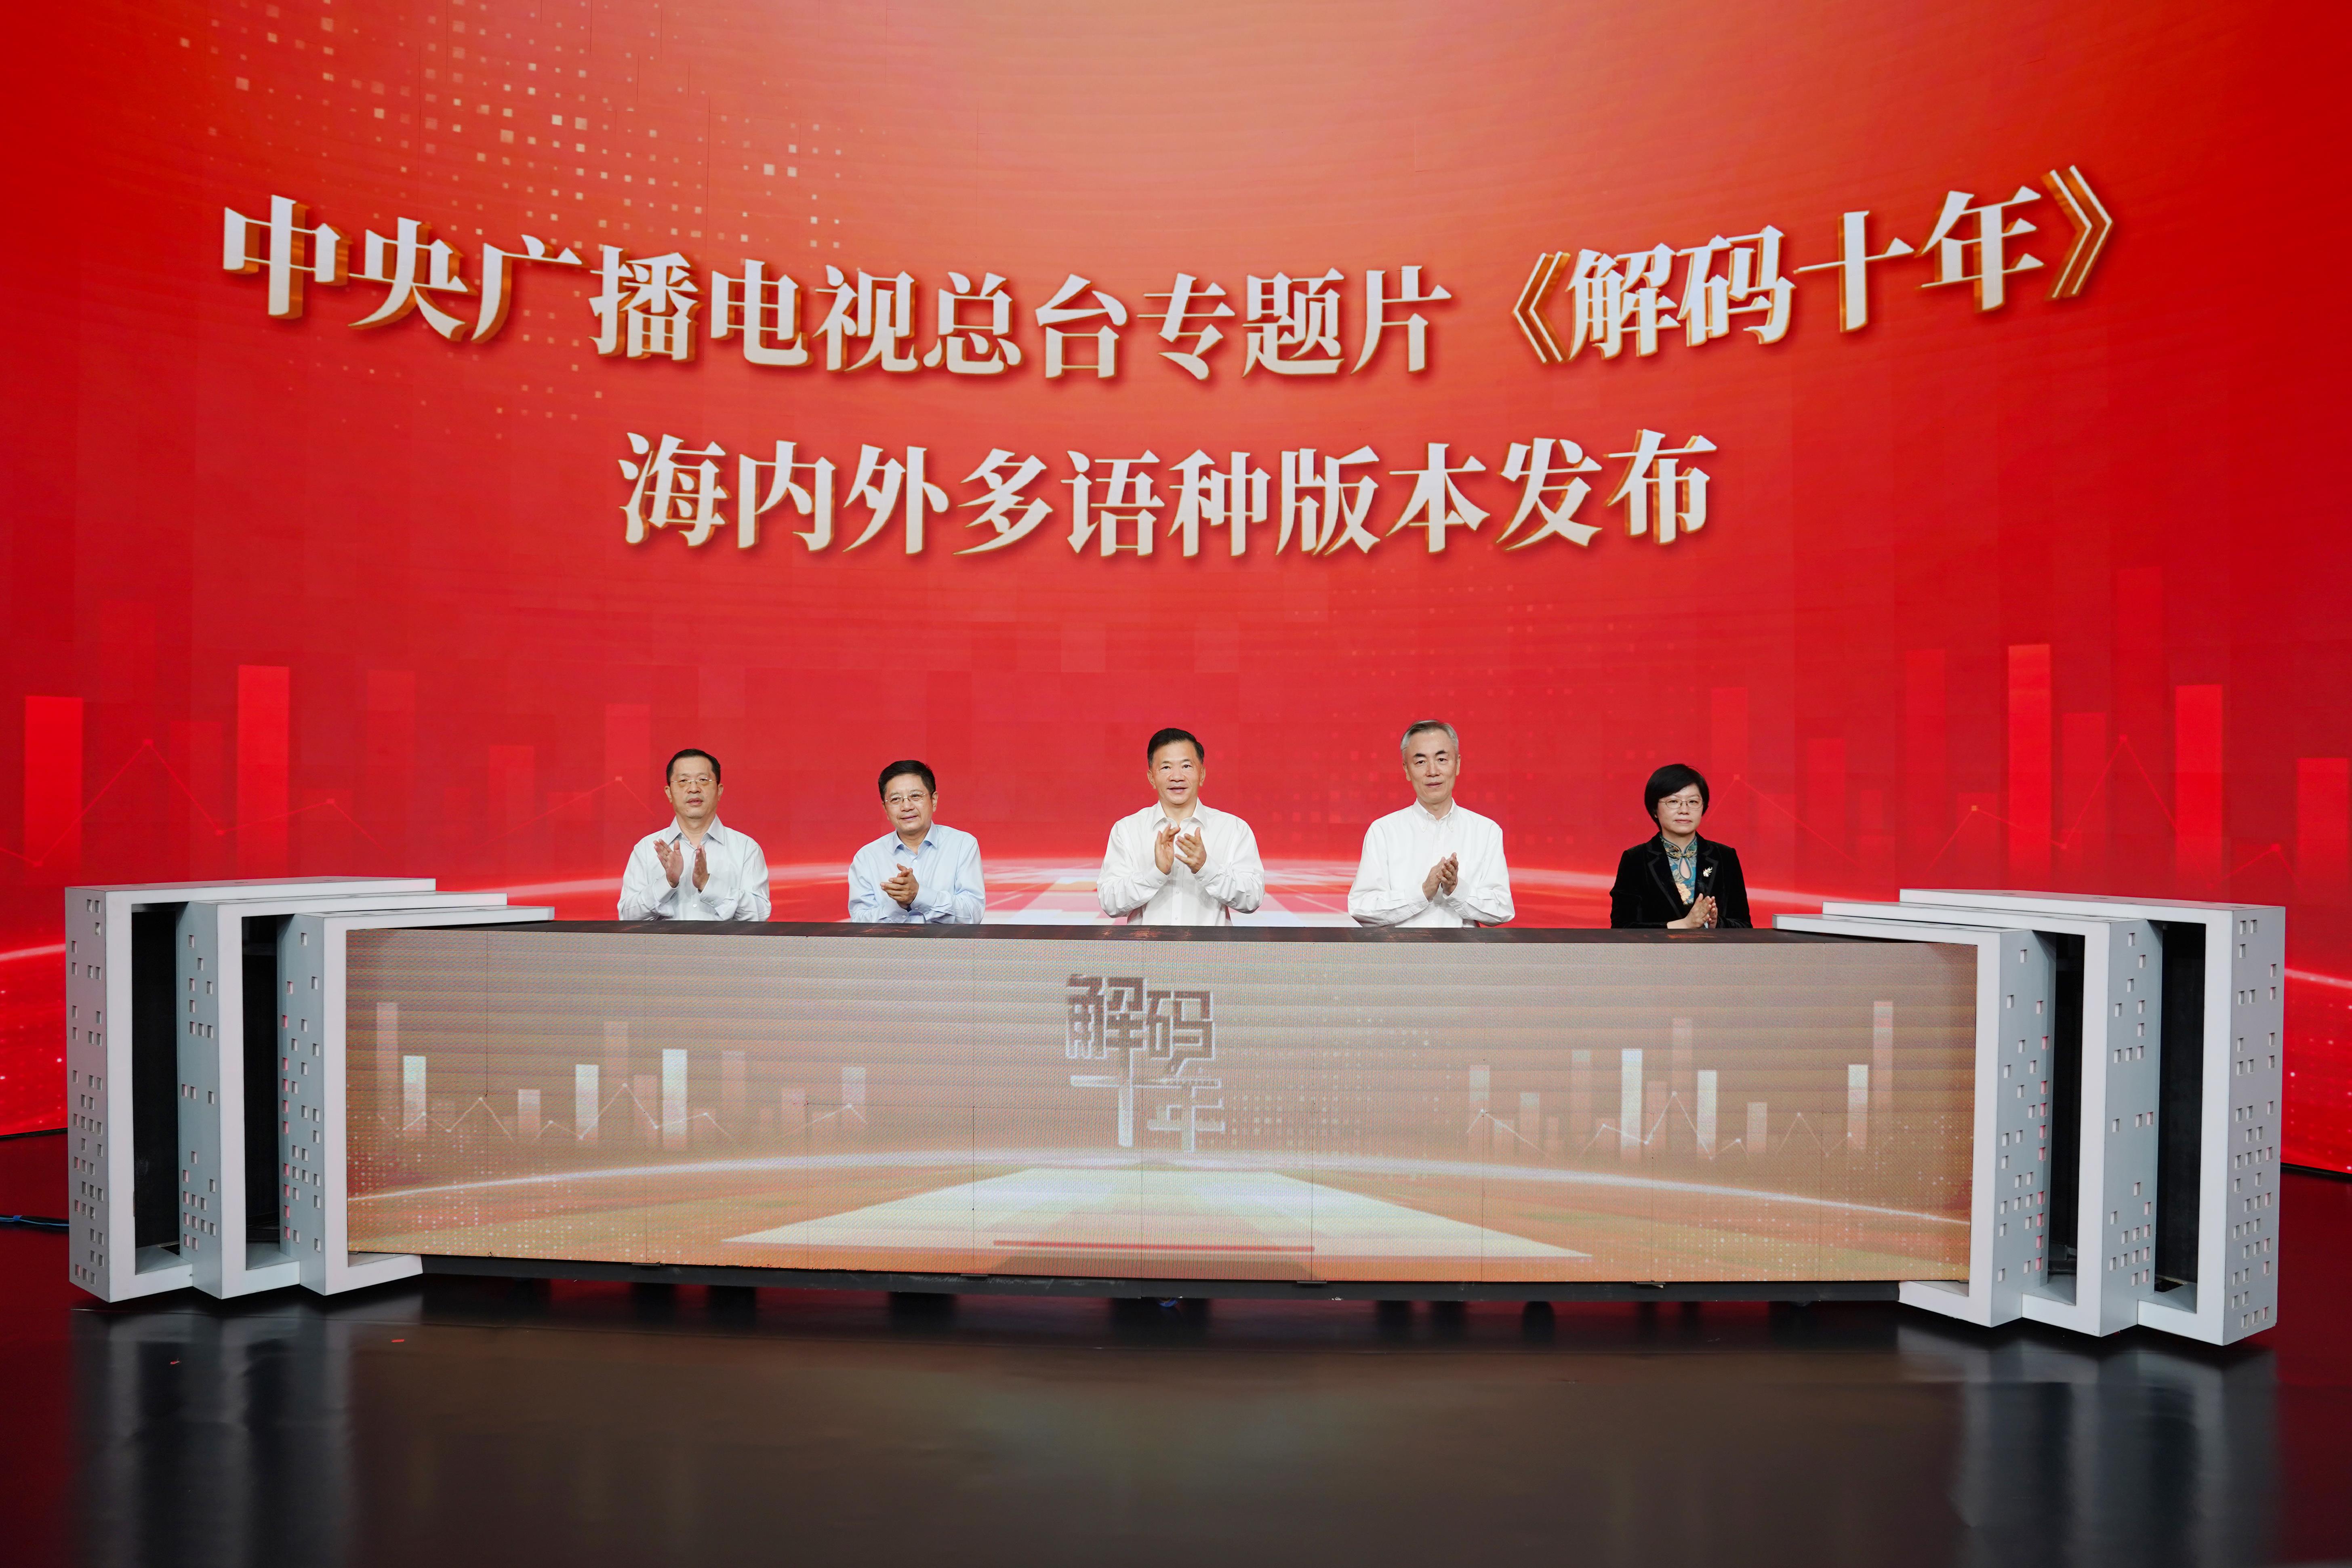 CMG 특집 프로그램 '중국의 10년 변화' 해내외 다어종 버전 발표